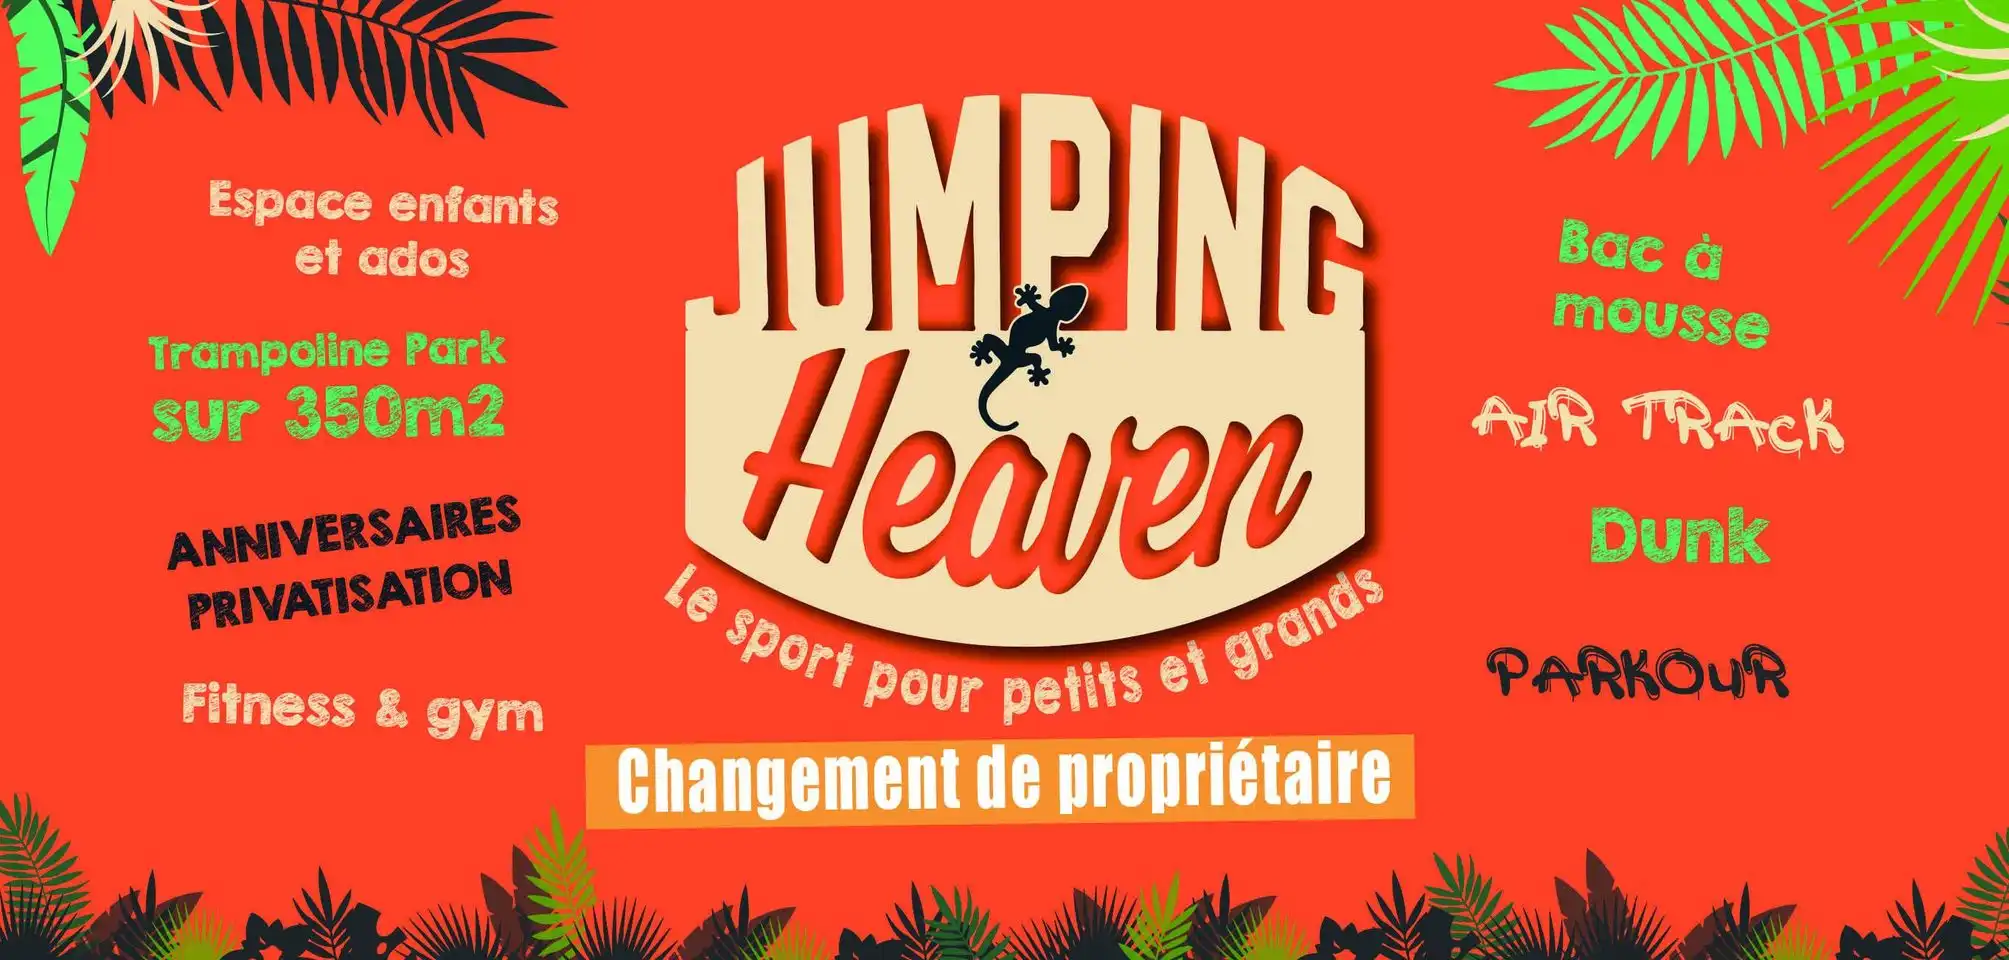 Jumping Heaven - Trampoline Park - Salon de Provence